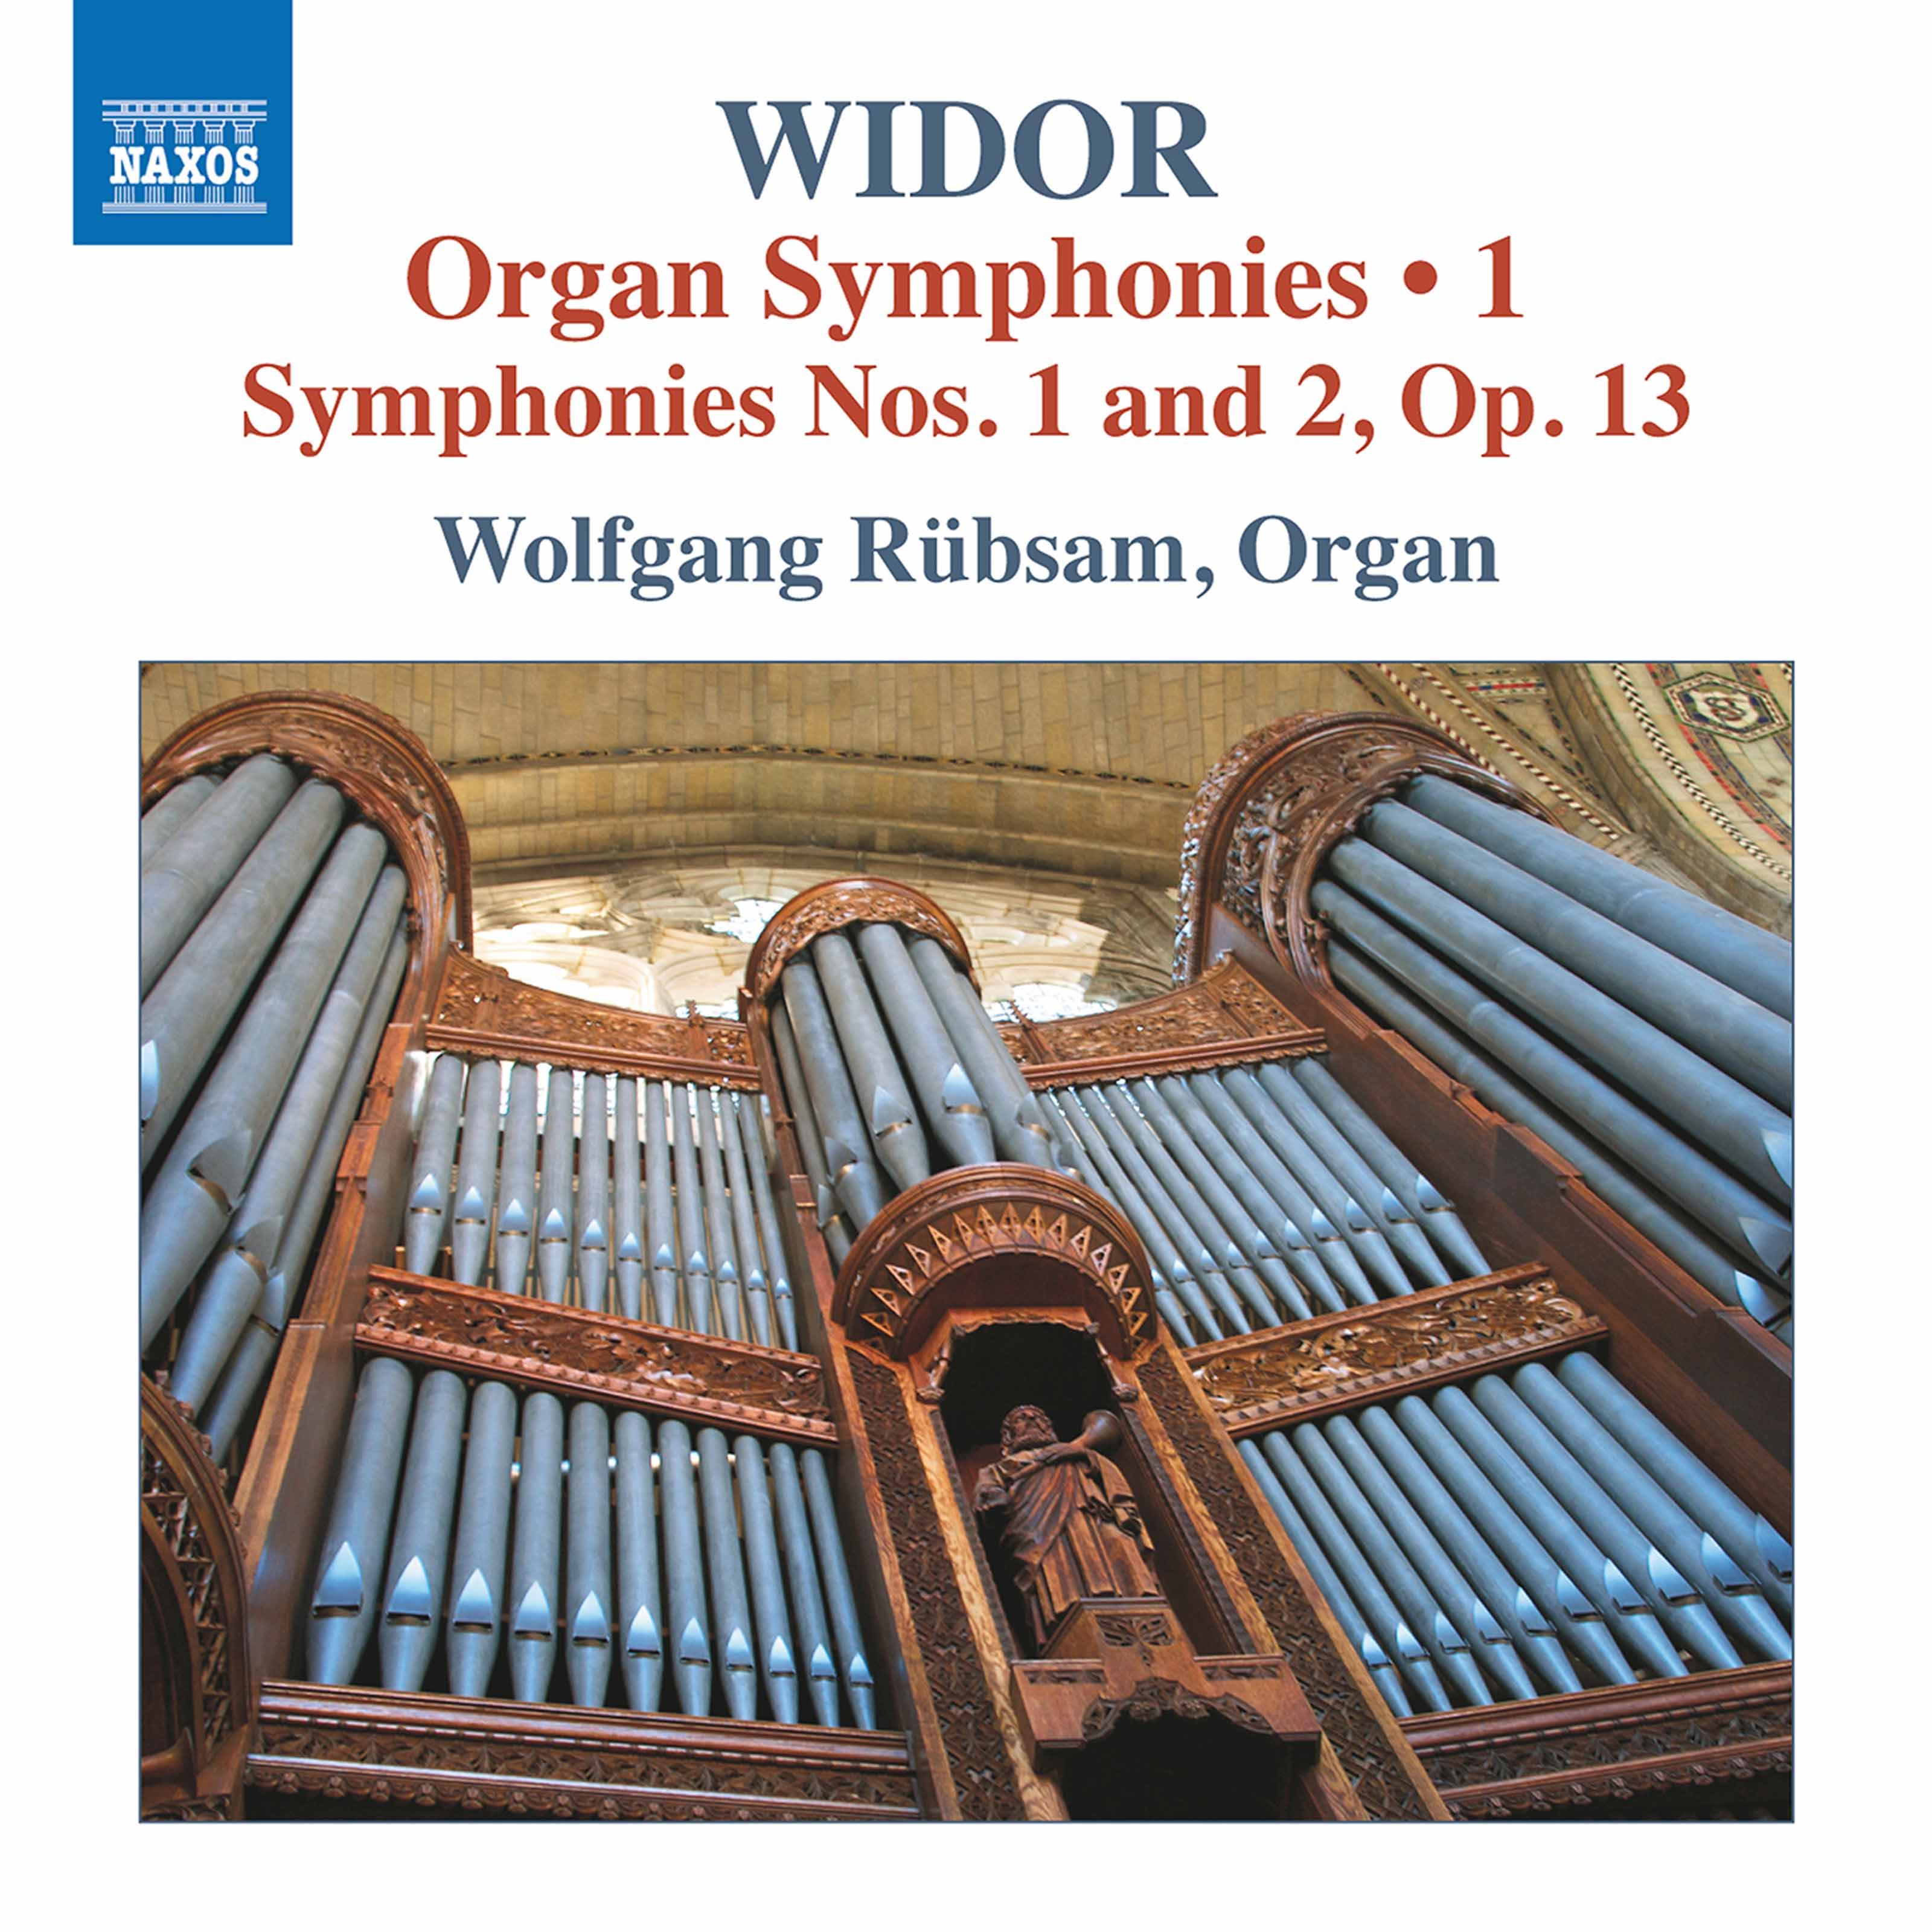 Wolfgang Rubsam - Widor: Organ Symphonies, Vol.1 - Symphonies Nos. 1 and 2, Op. 13 (2020) [FLAC 24bit/96kHz]